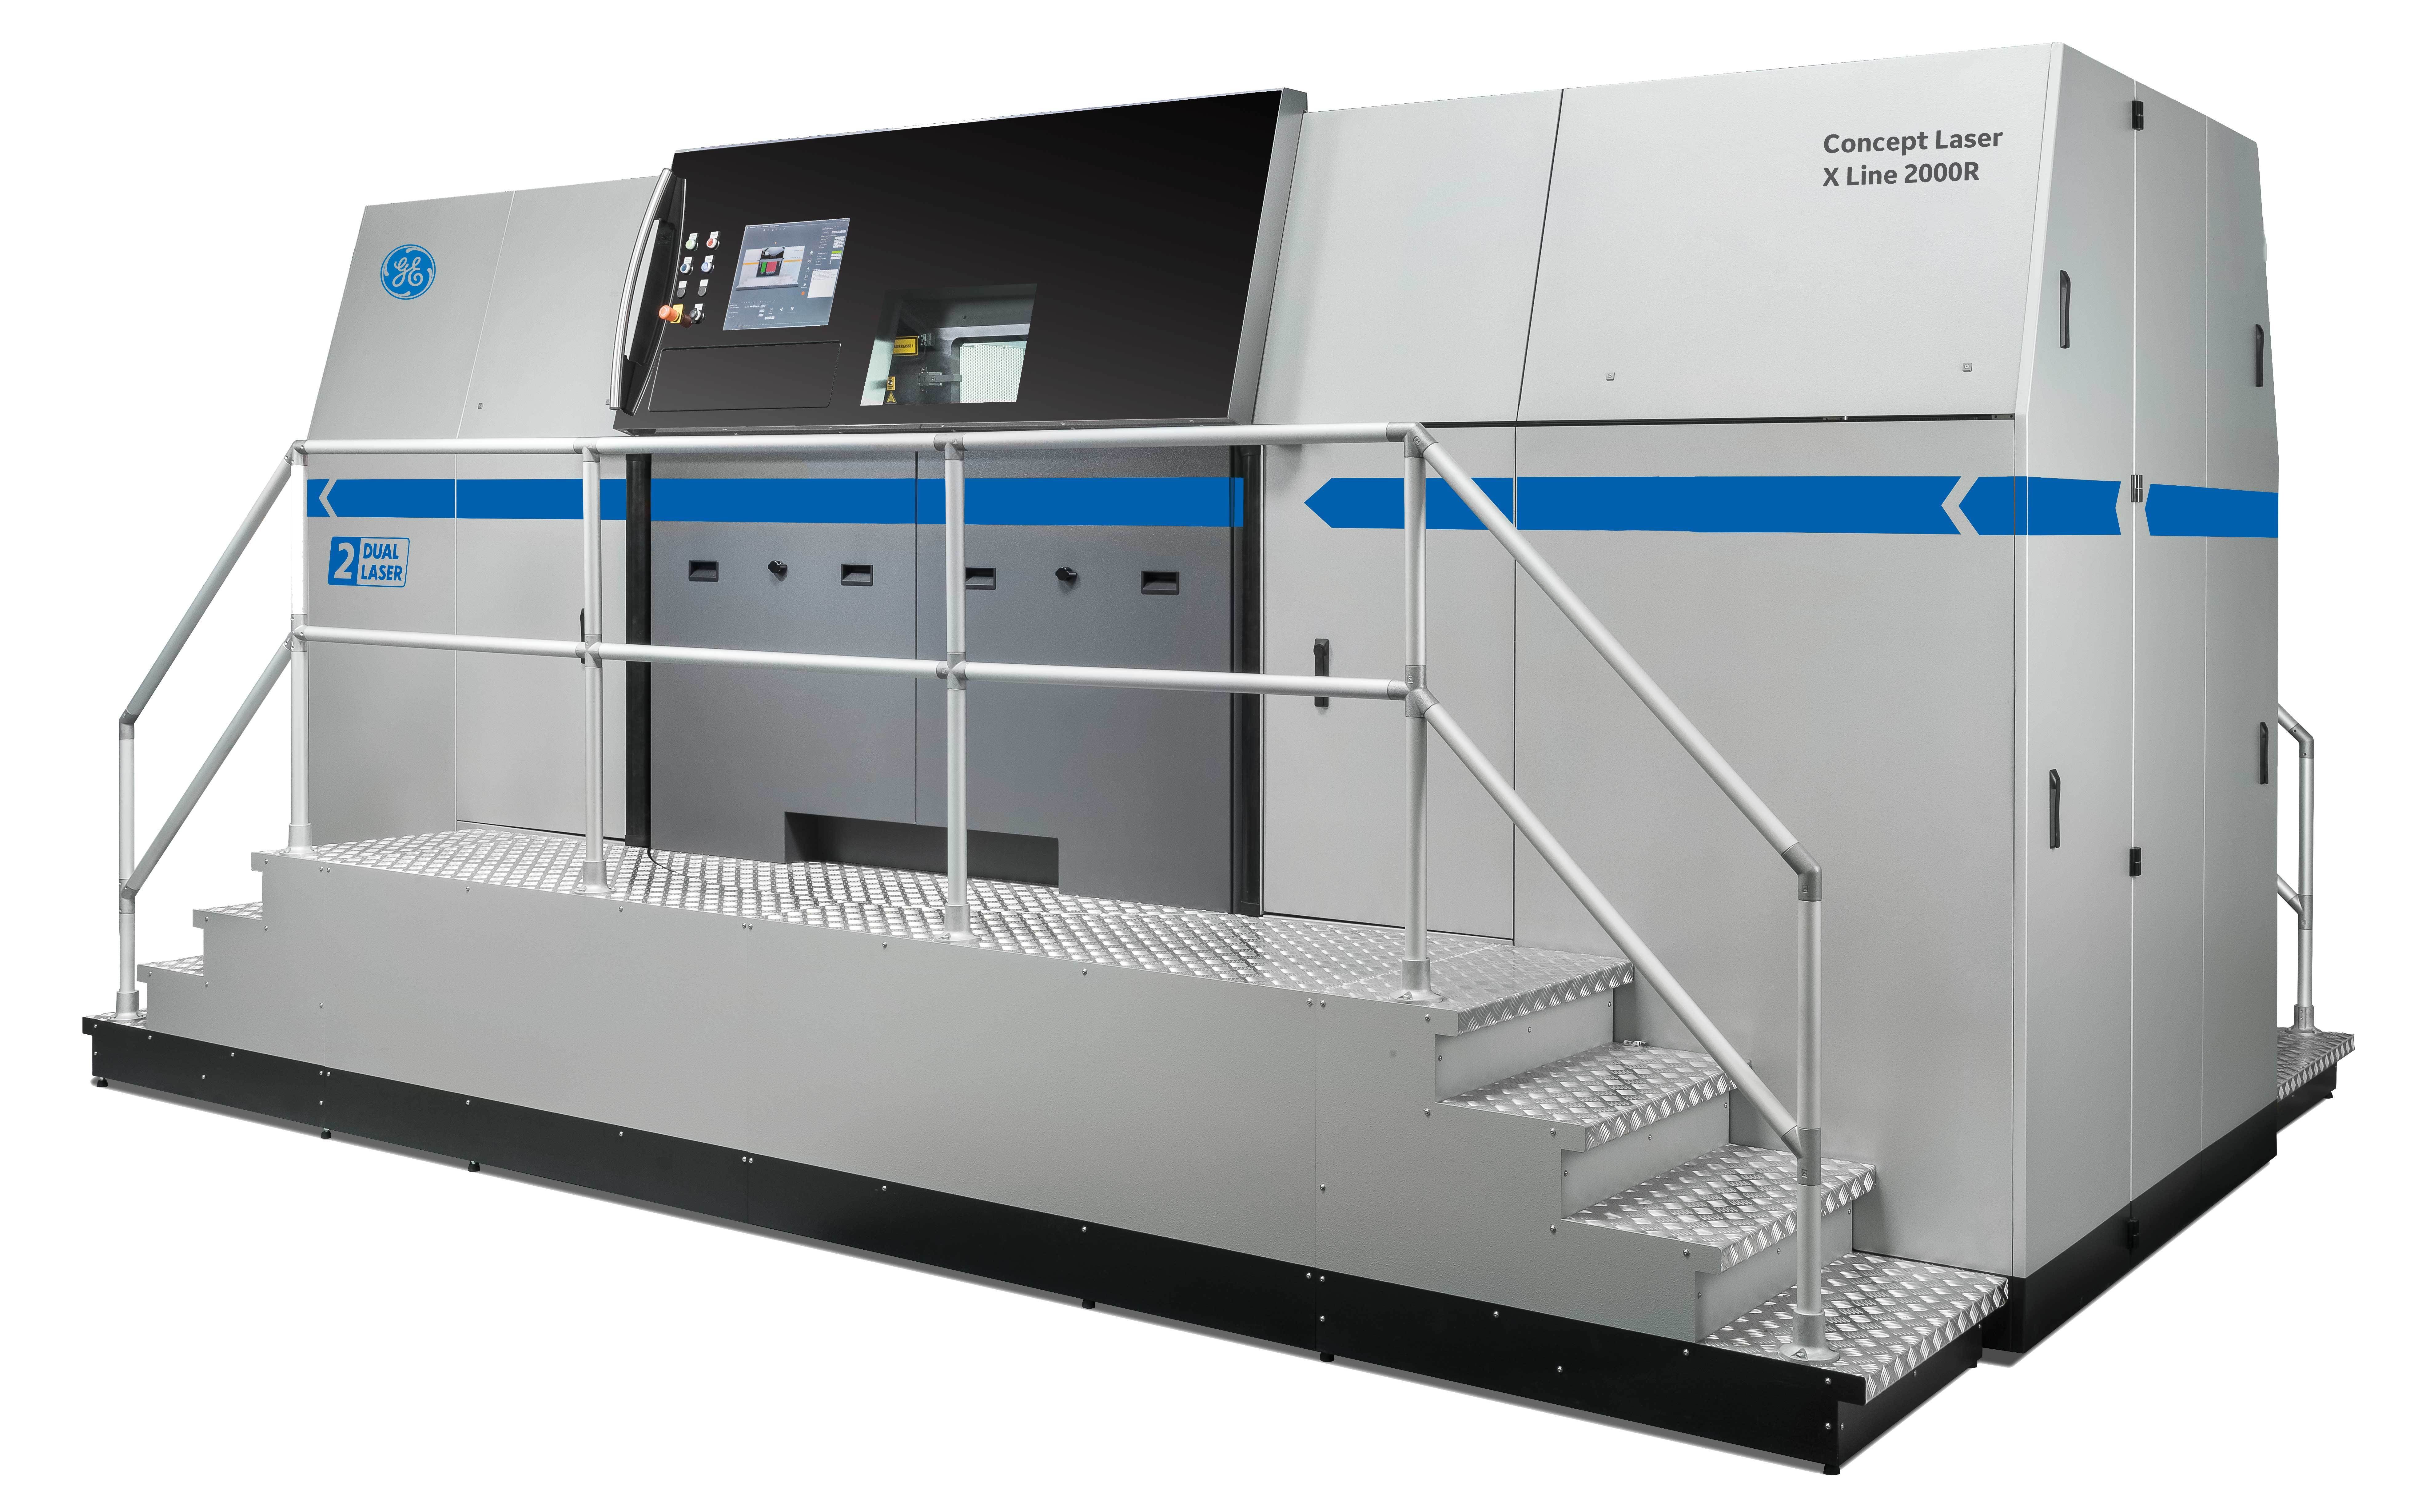 The GE AdditivesConcept Laser X Line 2000R 3D printer. Photo via Protolabs.